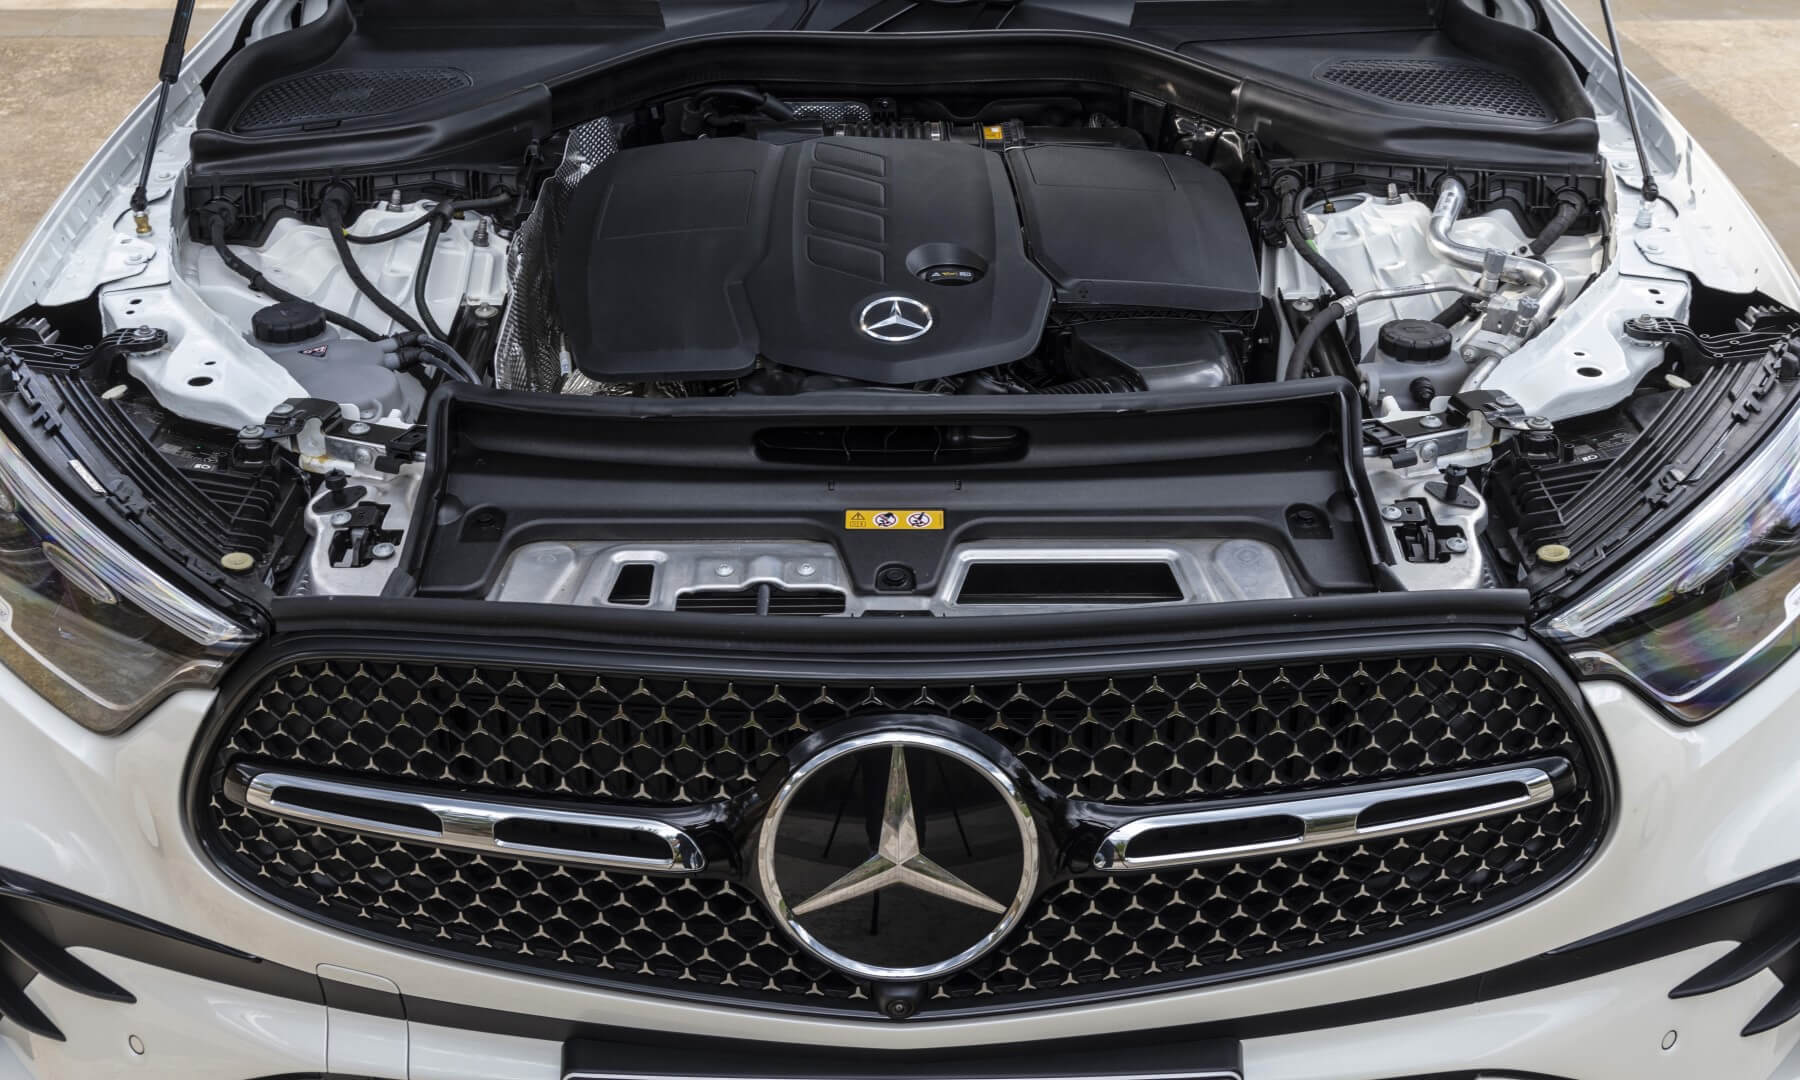 Mercedes-Benz GLC220d engine